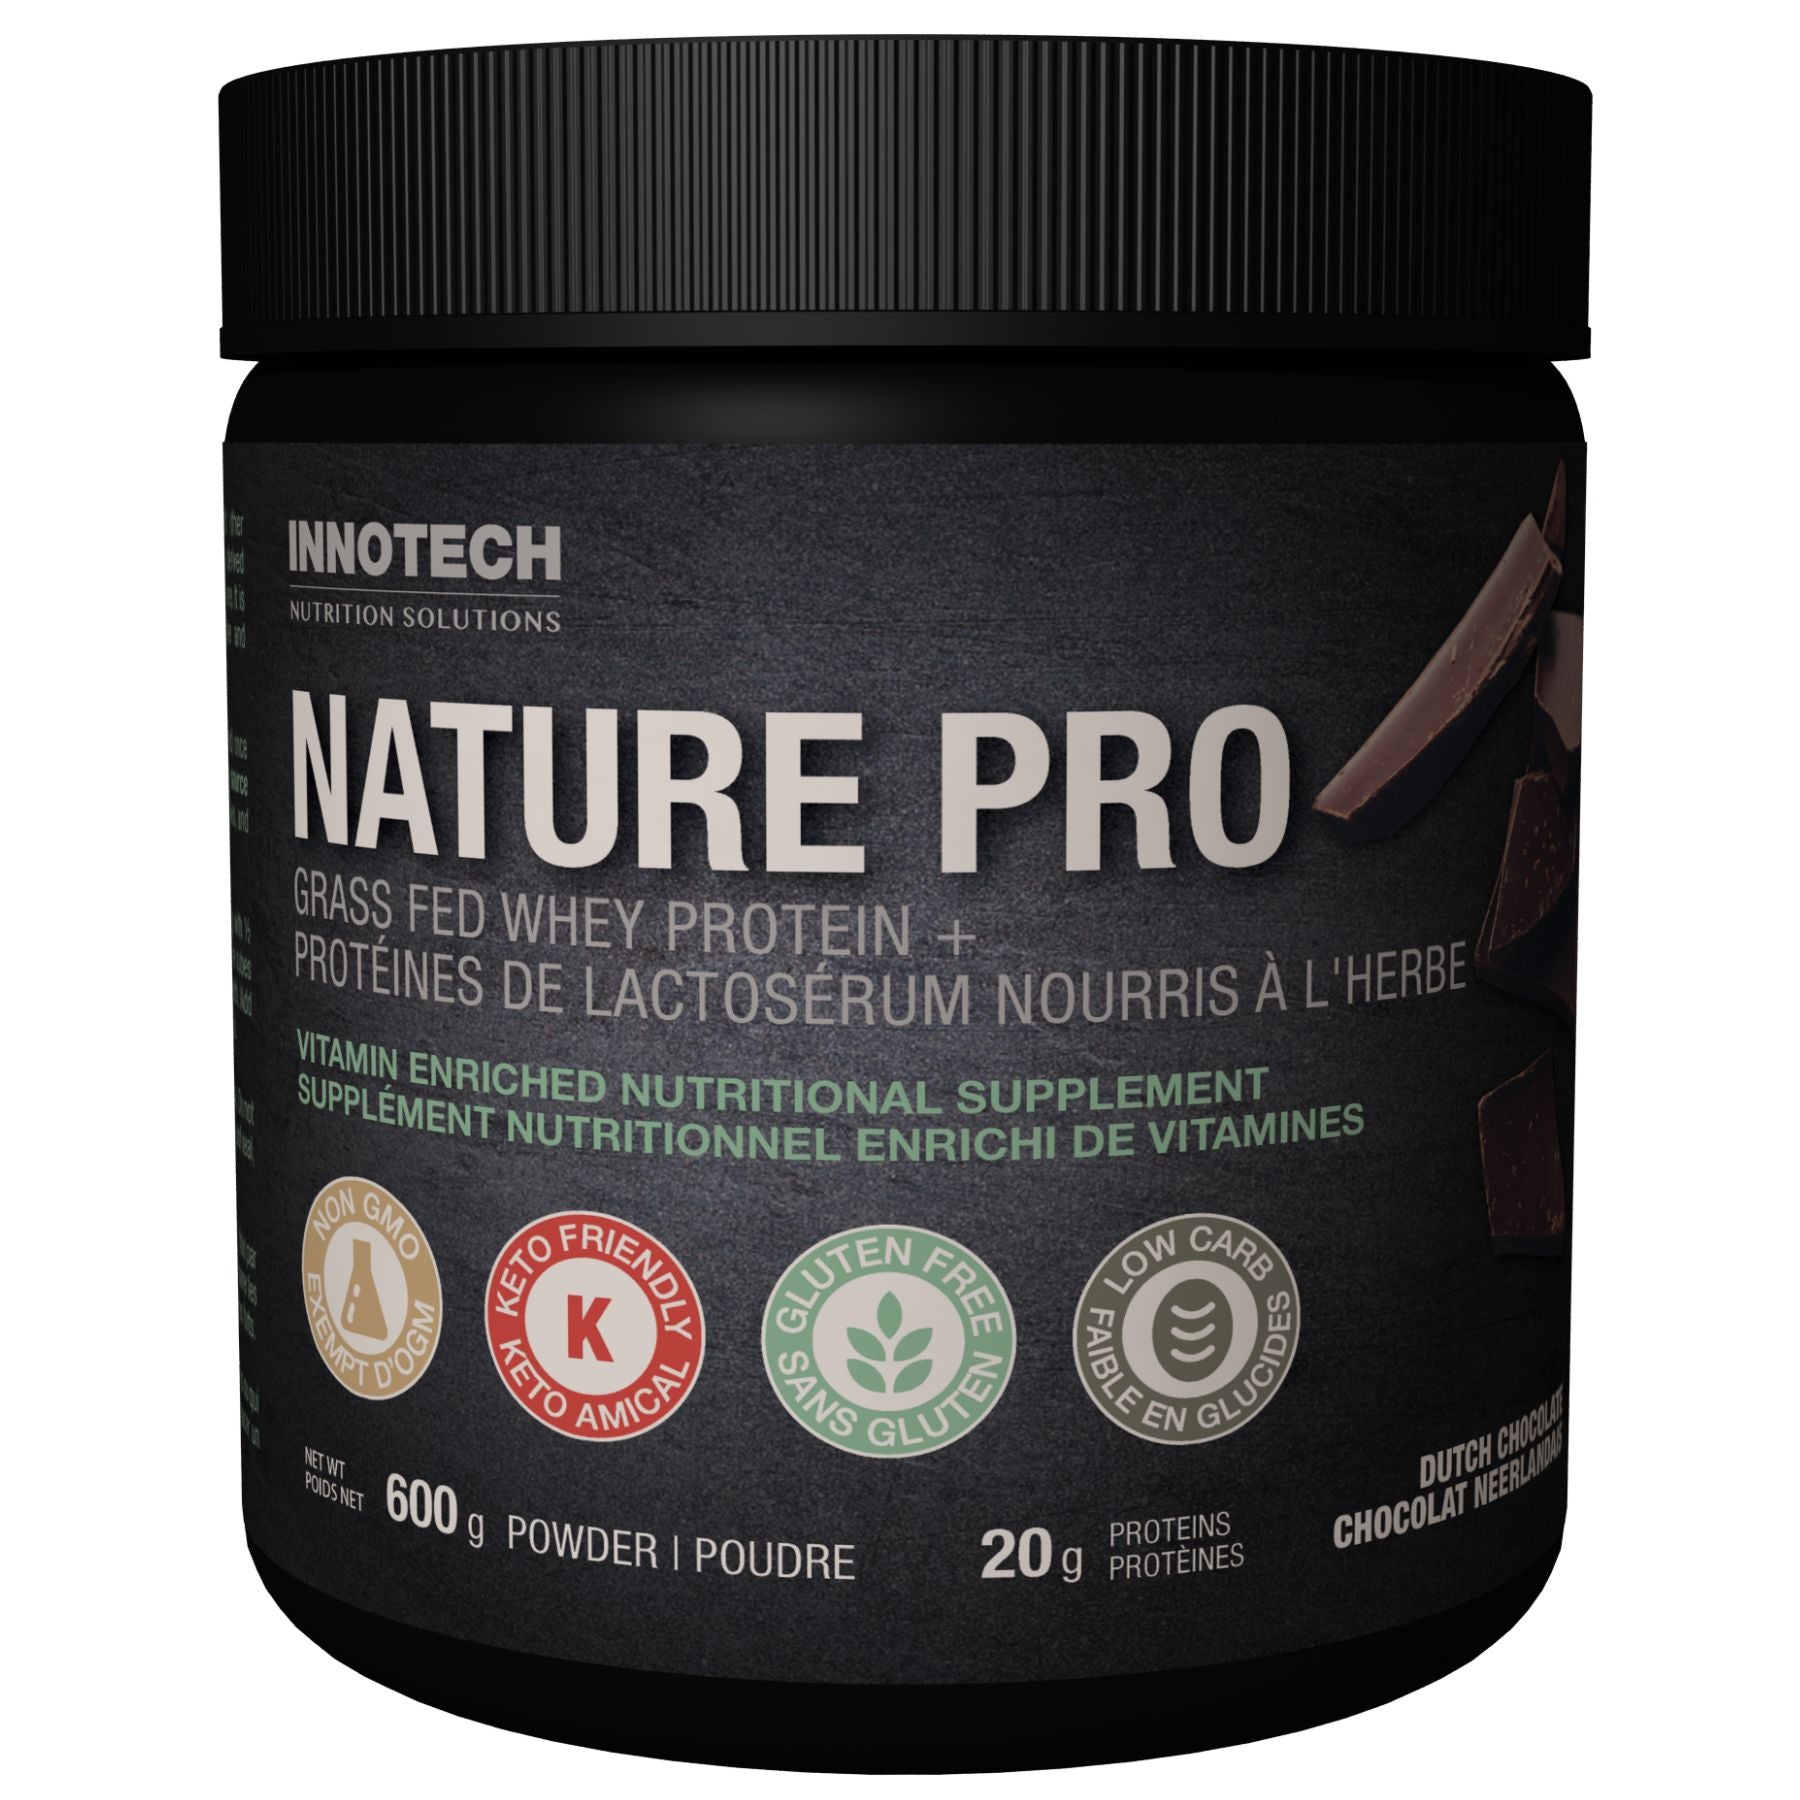 InnoTech NaturePro Grass Fed Whey Protein - Chocolate 600g